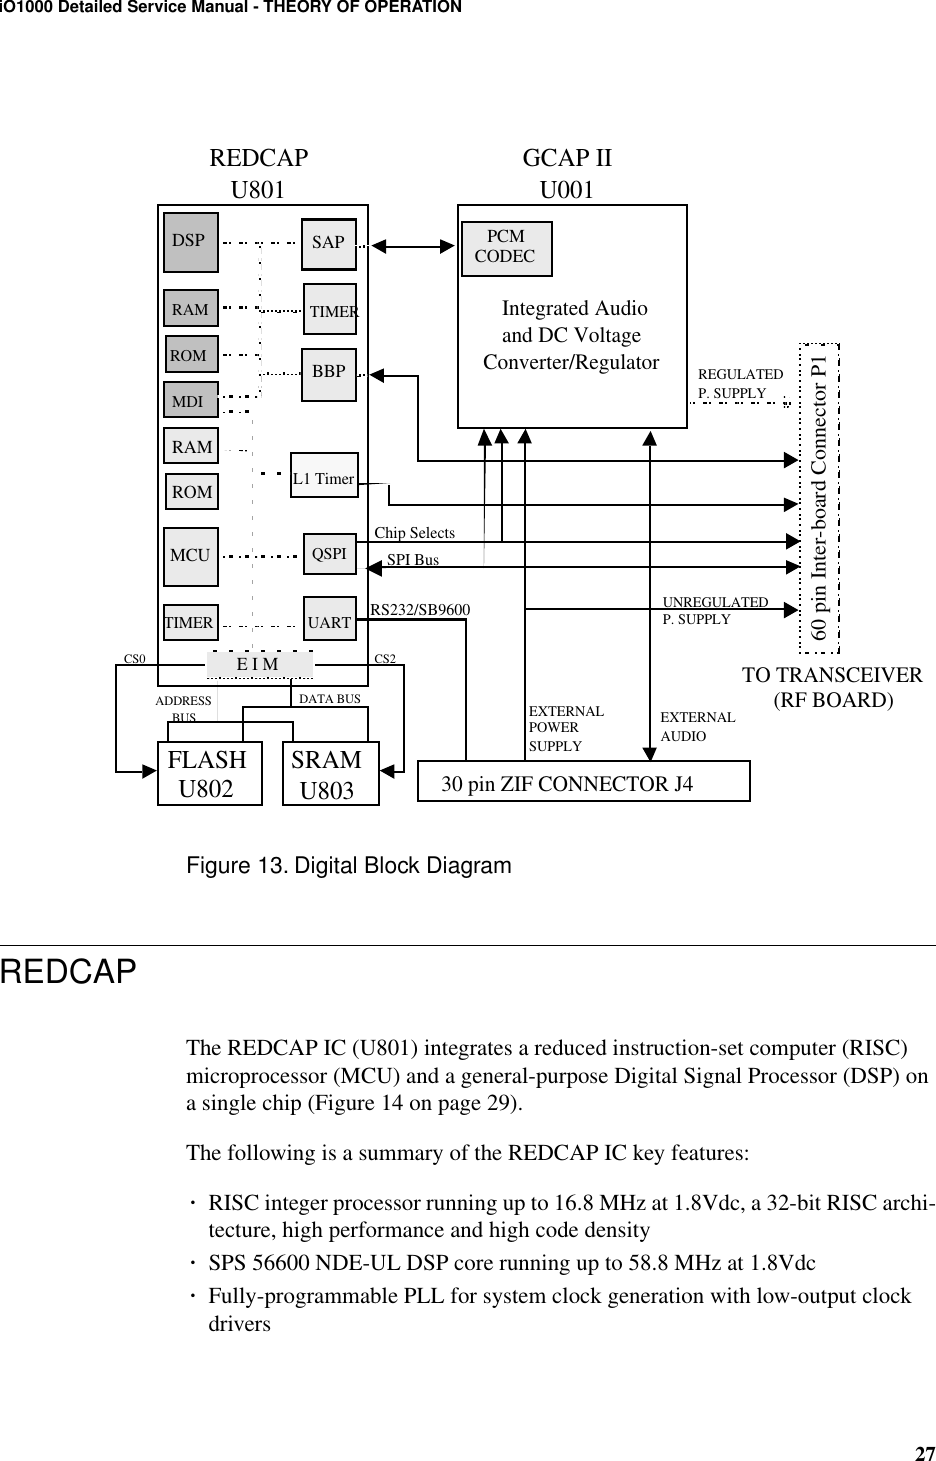 27iO1000 Detailed Service Manual - THEORY OF OPERATIONFigure 13. Digital Block DiagramREDCAPThe REDCAP IC (U801) integrates a reduced instruction-set computer (RISC) microprocessor (MCU) and a general-purpose Digital Signal Processor (DSP) on a single chip (Figure 14 on page 29).The following is a summary of the REDCAP IC key features:¥RISC integer processor running up to 16.8 MHz at 1.8Vdc, a 32-bit RISC archi-tecture, high performance and high code density¥SPS 56600 NDE-UL DSP core running up to 58.8 MHz at 1.8Vdc¥Fully-programmable PLL for system clock generation with low-output clock driversFLASHU802 SRAMU803GCAP IIU001Integrated Audioand DC Voltage Converter/Regulator 30 pin ZIF CONNECTOR J4TO TRANSCEIVER(RF BOARD)REDCAPU801DSPRAMROMMDIRAMROMMCUSAPTIMERBBPL1 TimerTIMER UARTE I MRS232/SB960060 pin Inter-board Connector P1EXTERNALPOWERSUPPLYEXTERNALAUDIOPCMCODECREGULATEDP. SUPPLYUNREGULATEDP. SUPPLYSPI BusChip SelectsDATA BUSADDRESSBUSCS0 CS2QSPI